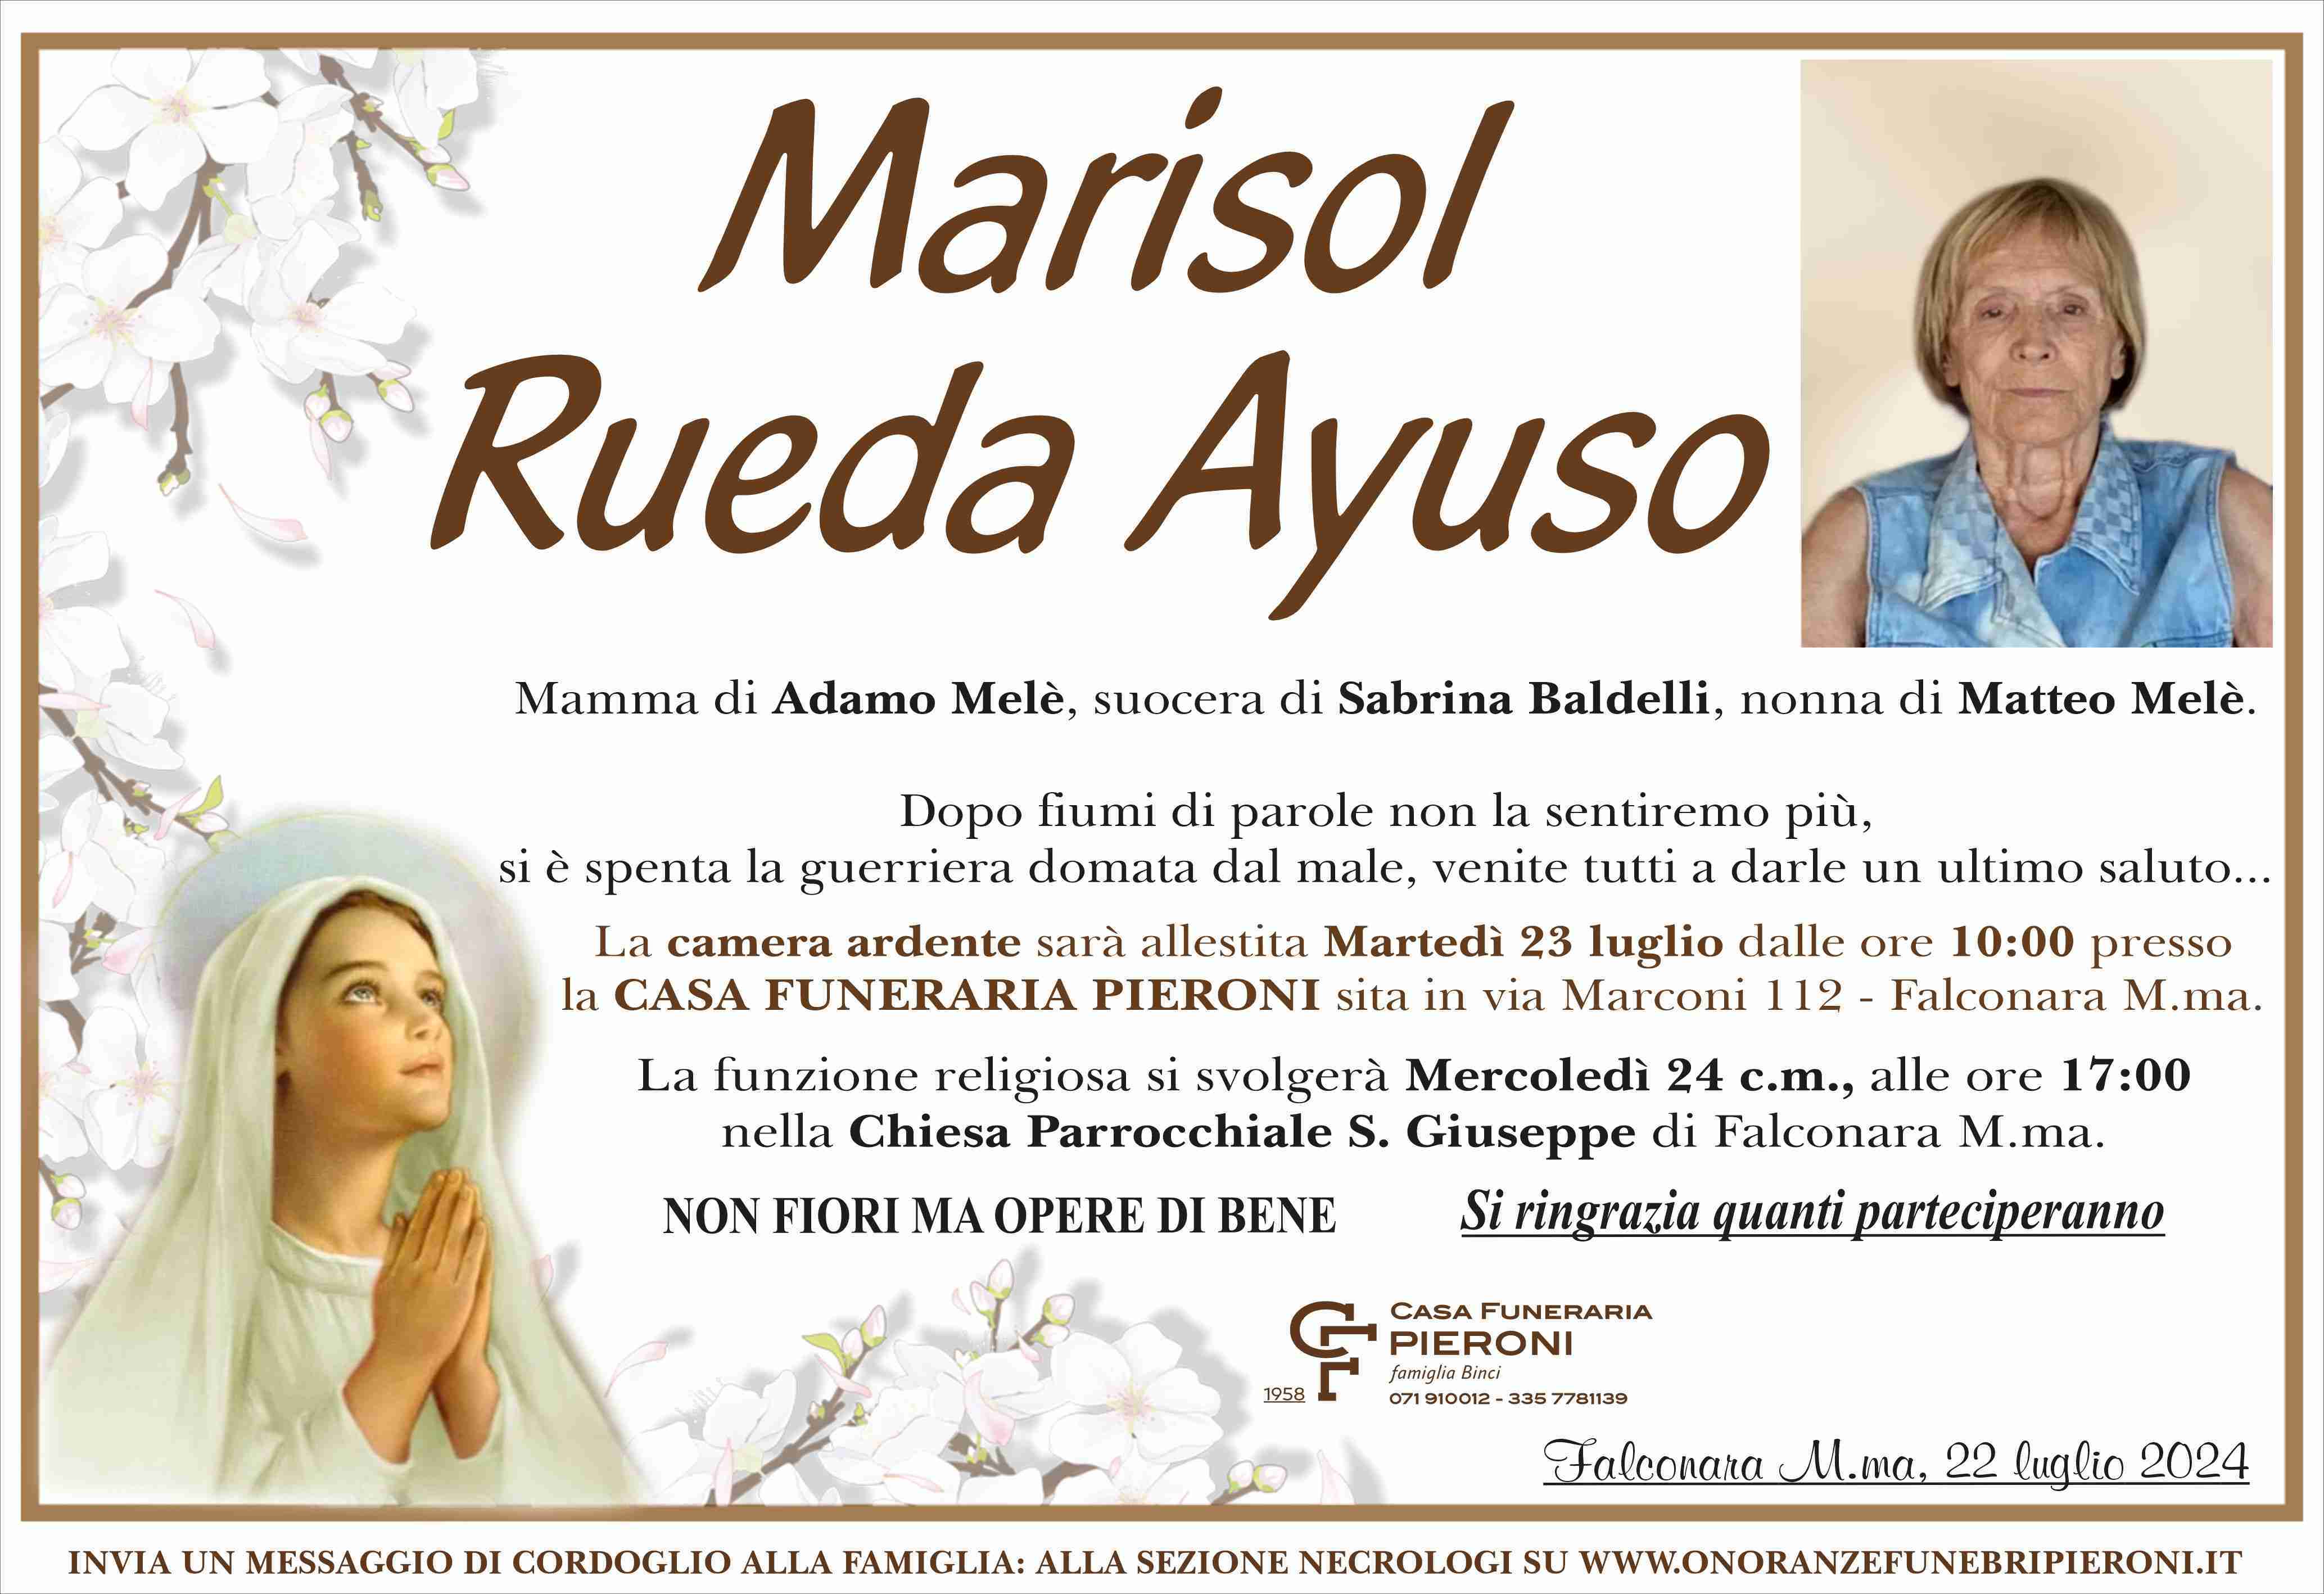 Maria Soledad Rueda